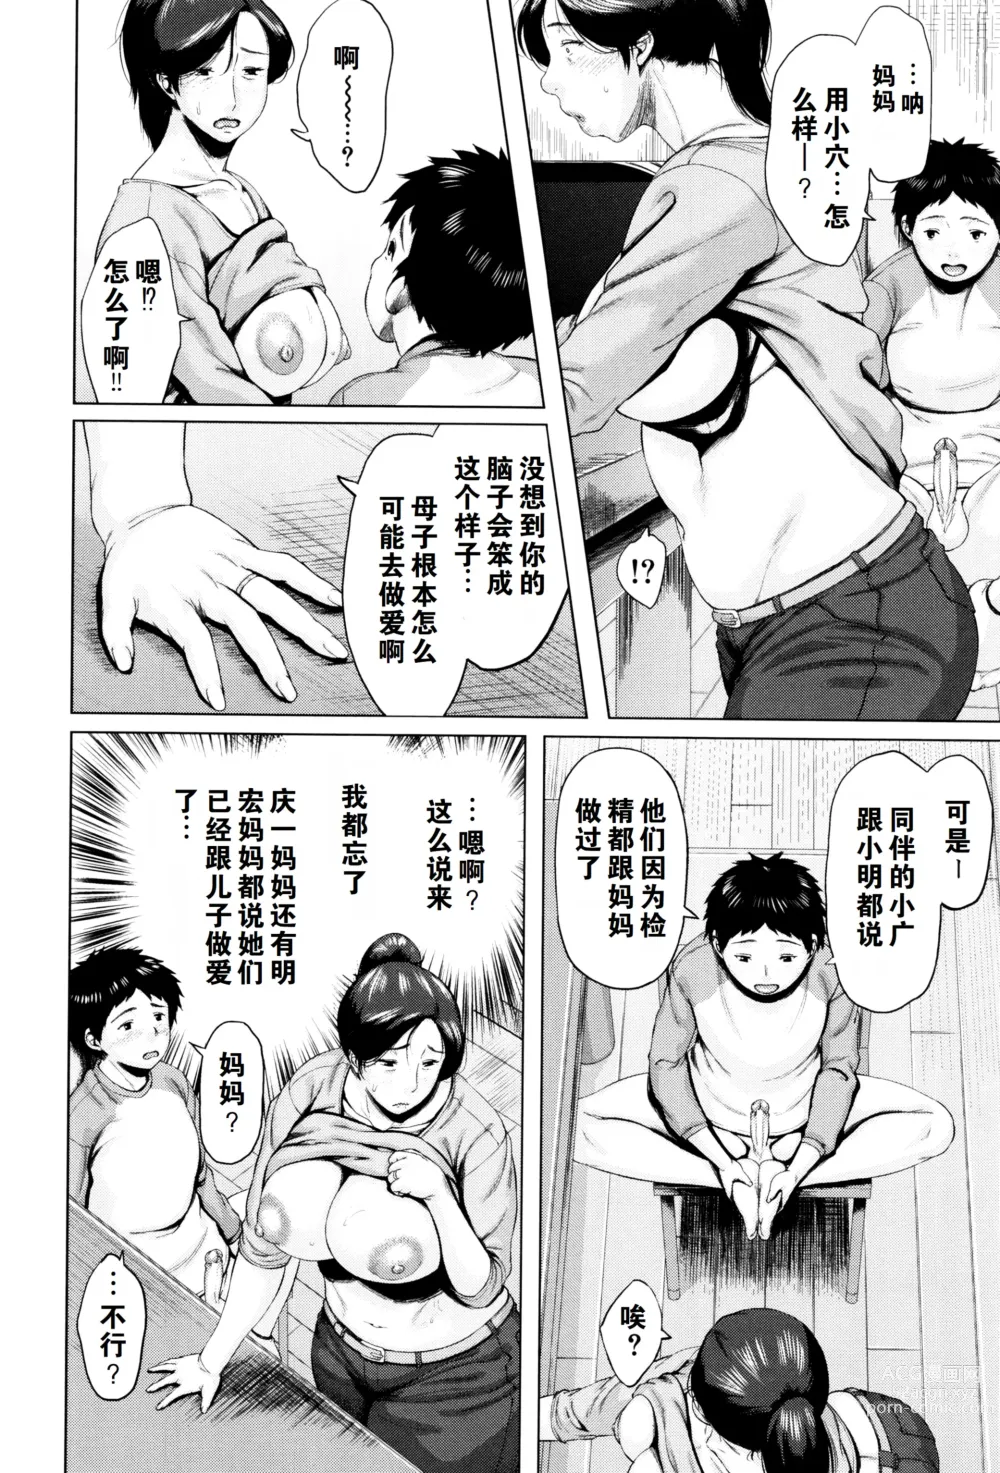 Page 19 of manga Kinyoubi no Haha-tachi e - To Fridays mothers